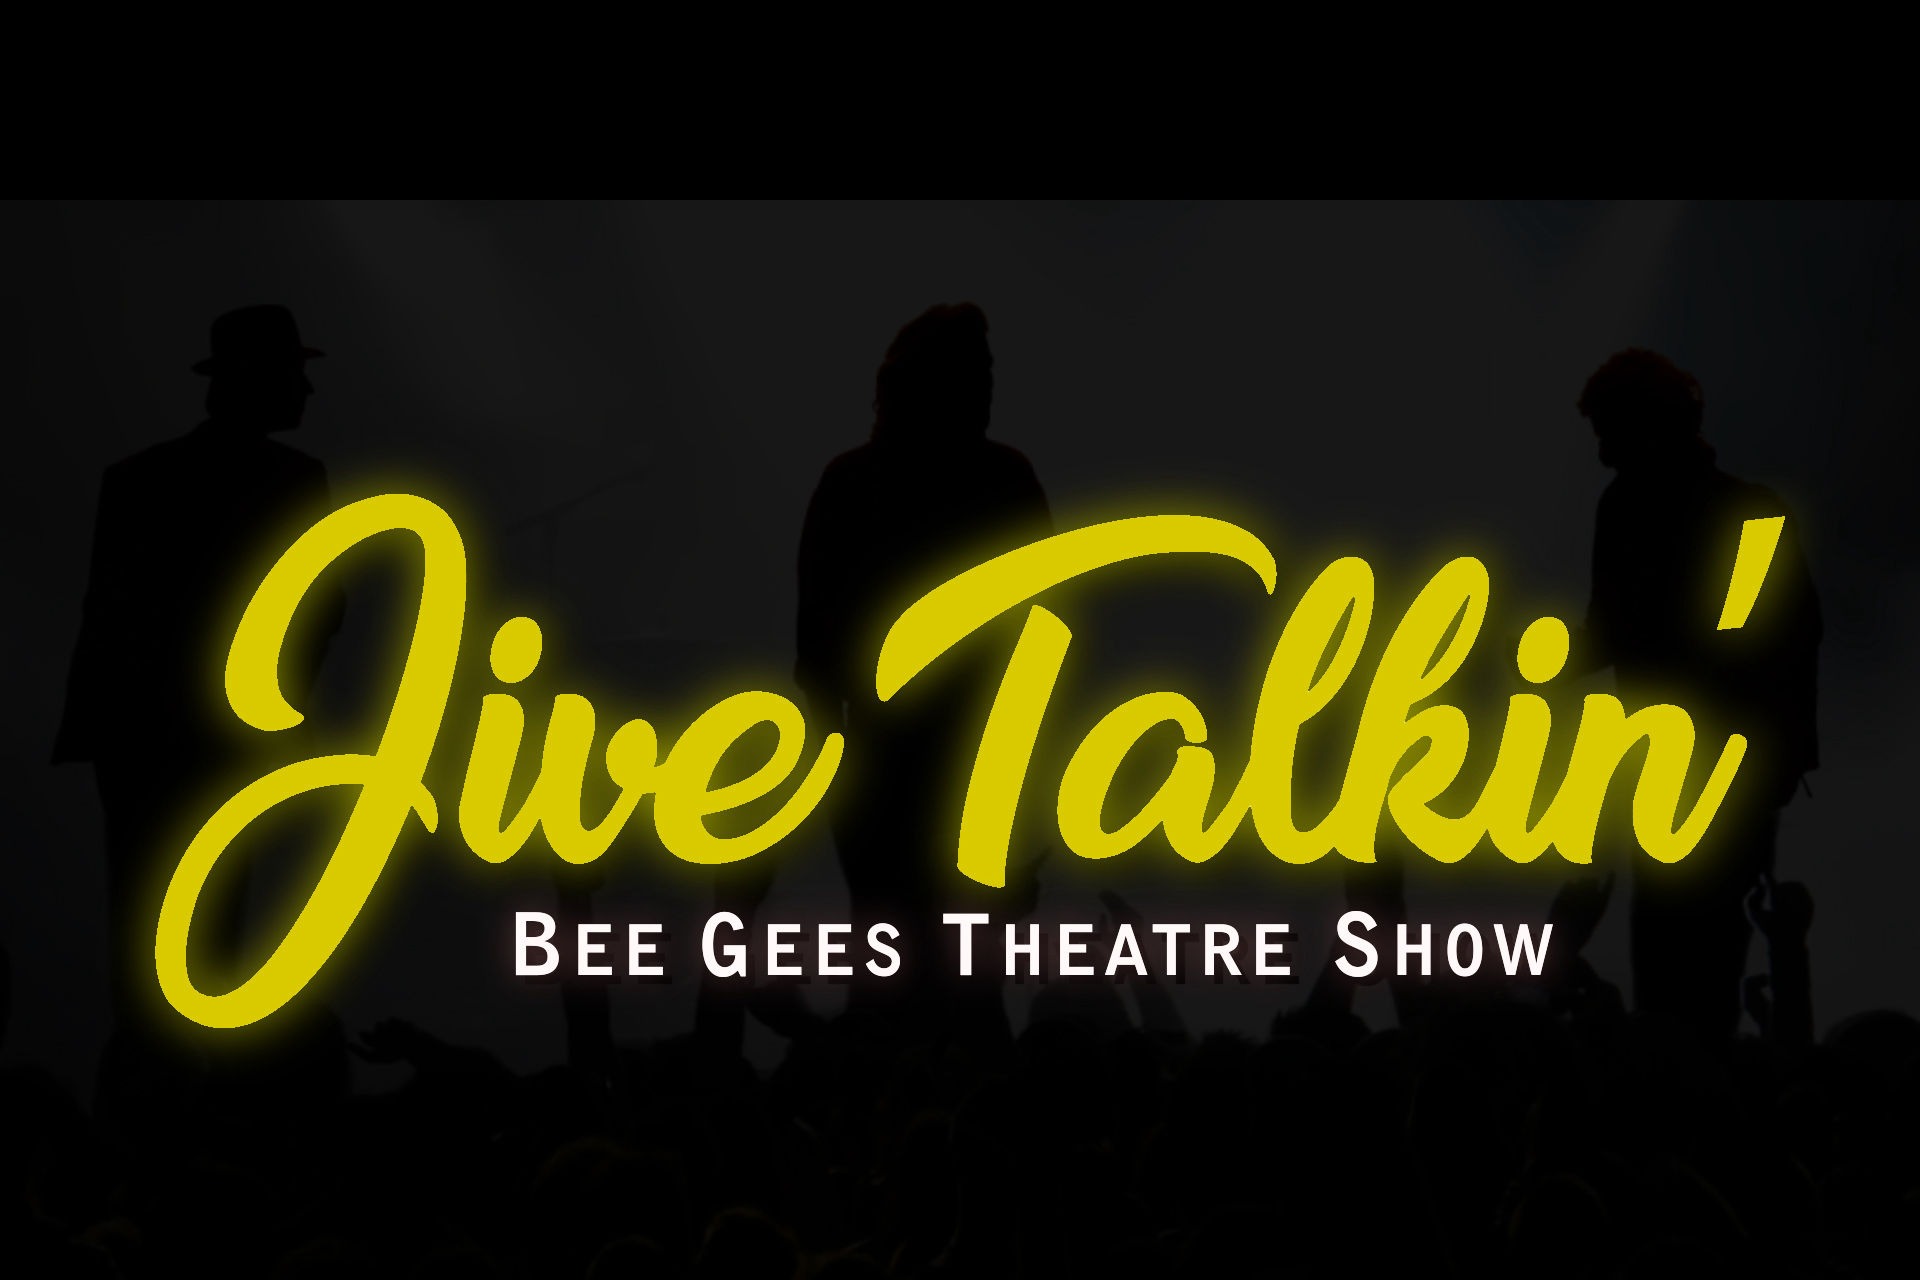 Jive Talkin' perform The Bee Gees